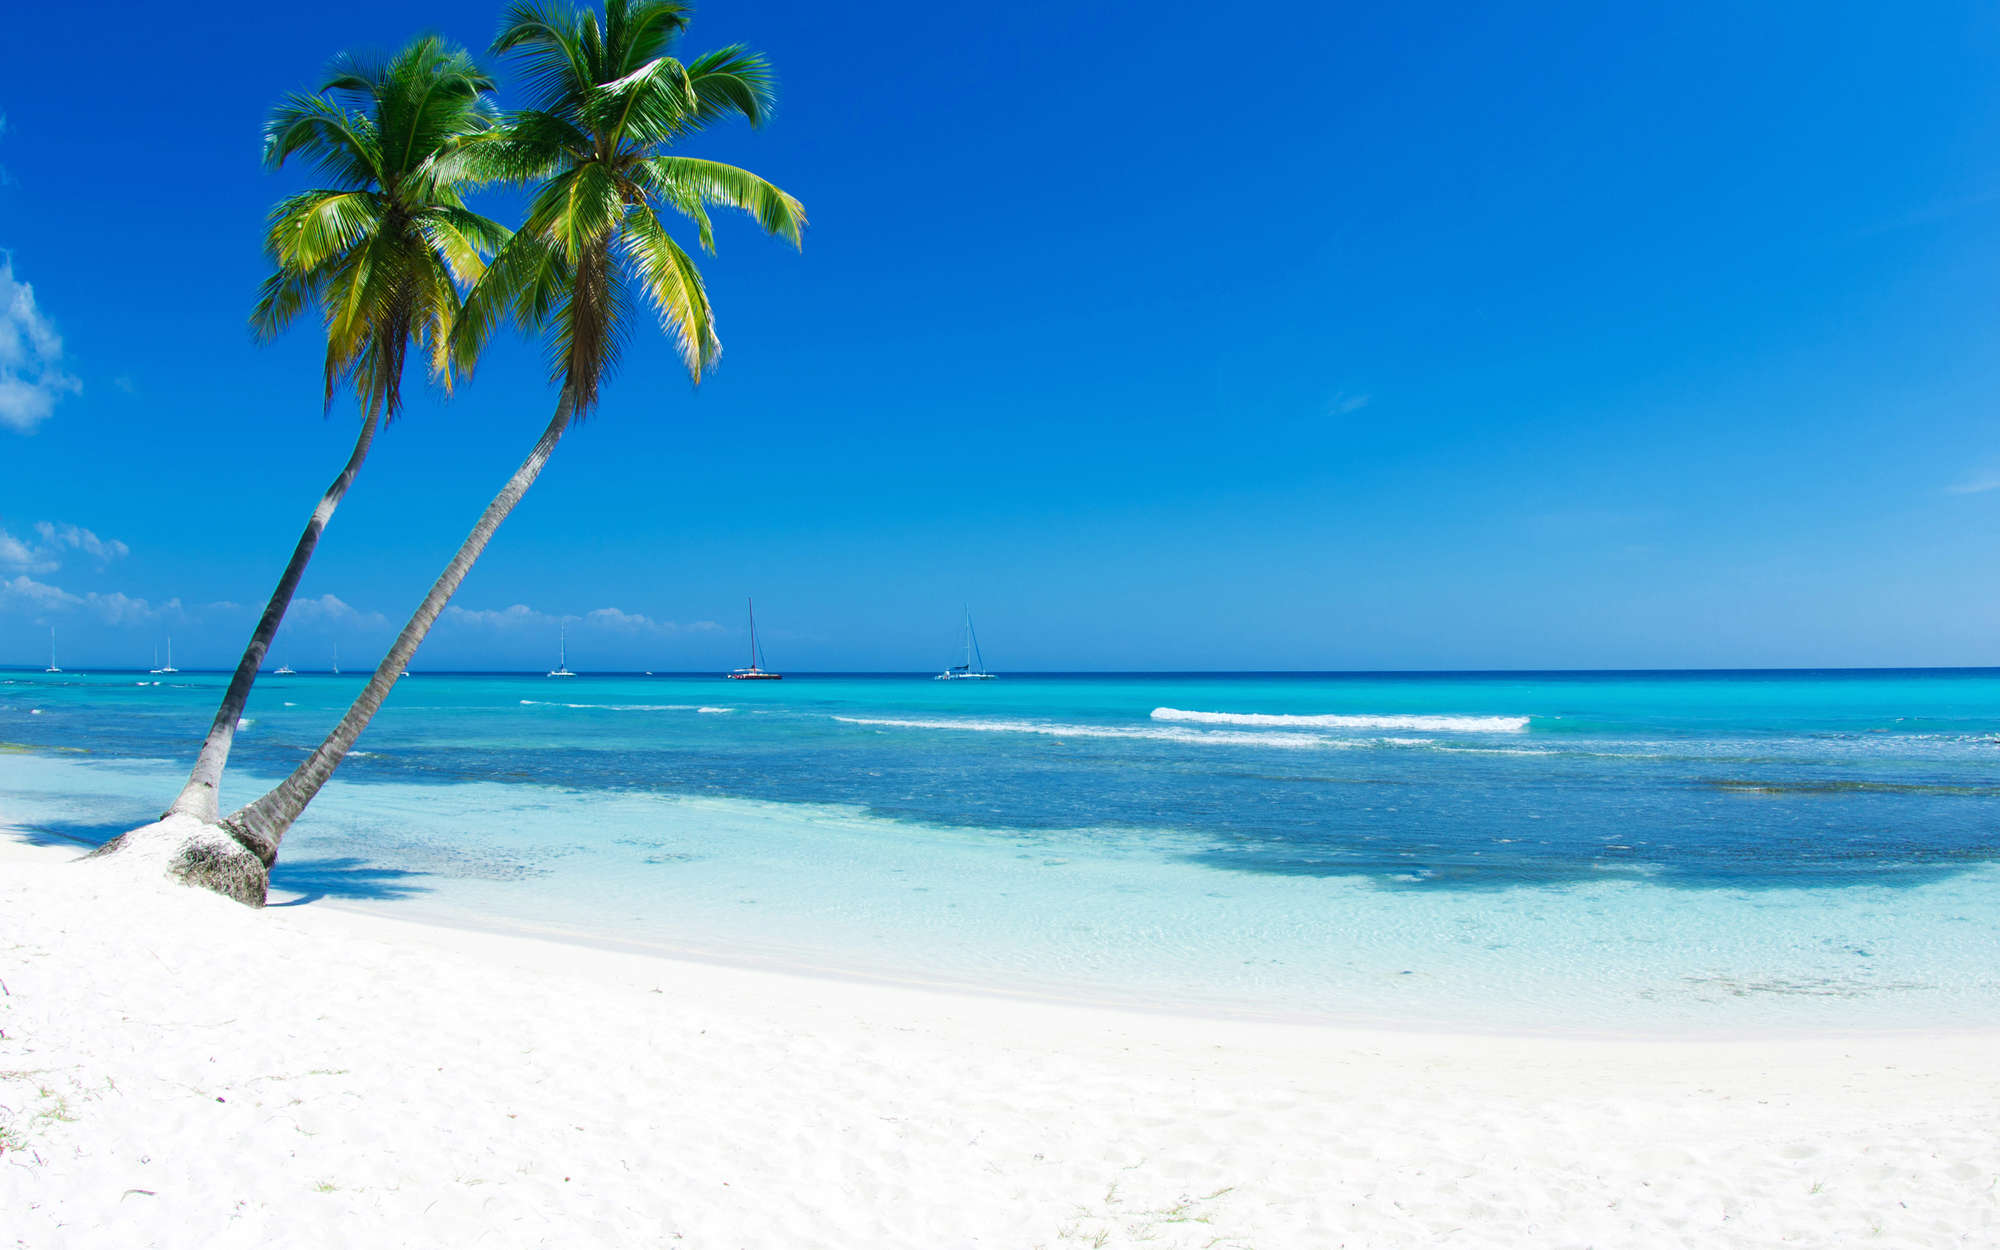             Photo wallpaper sandy beach in white with palm tree - Premium smooth fleece
        